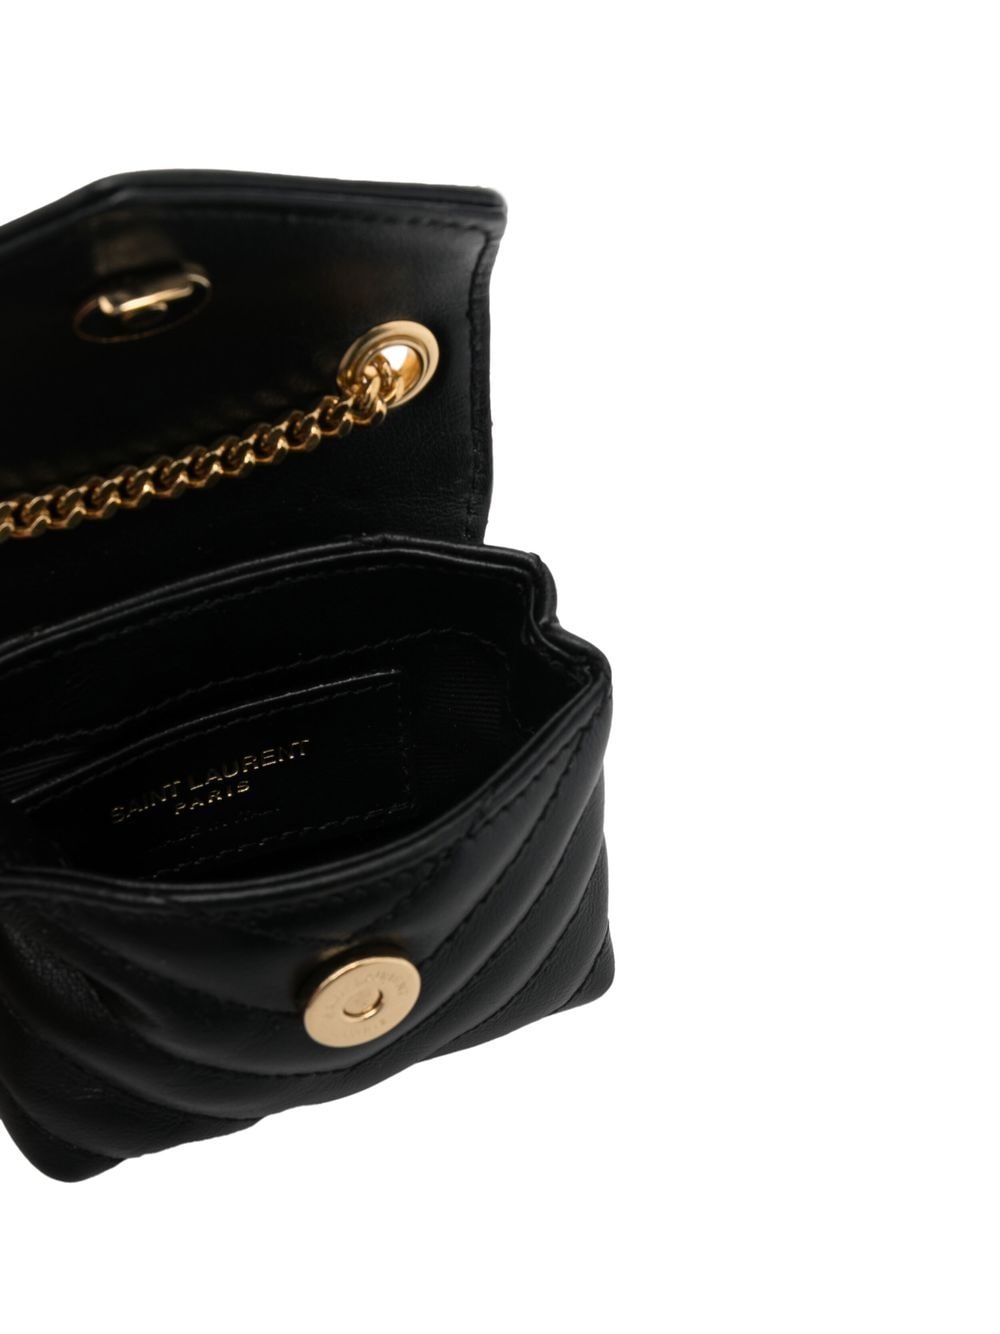 Louis Feraud Quilted Leather Shoulder Bag - Black Crossbody Bags, Handbags  - WLOFE23184